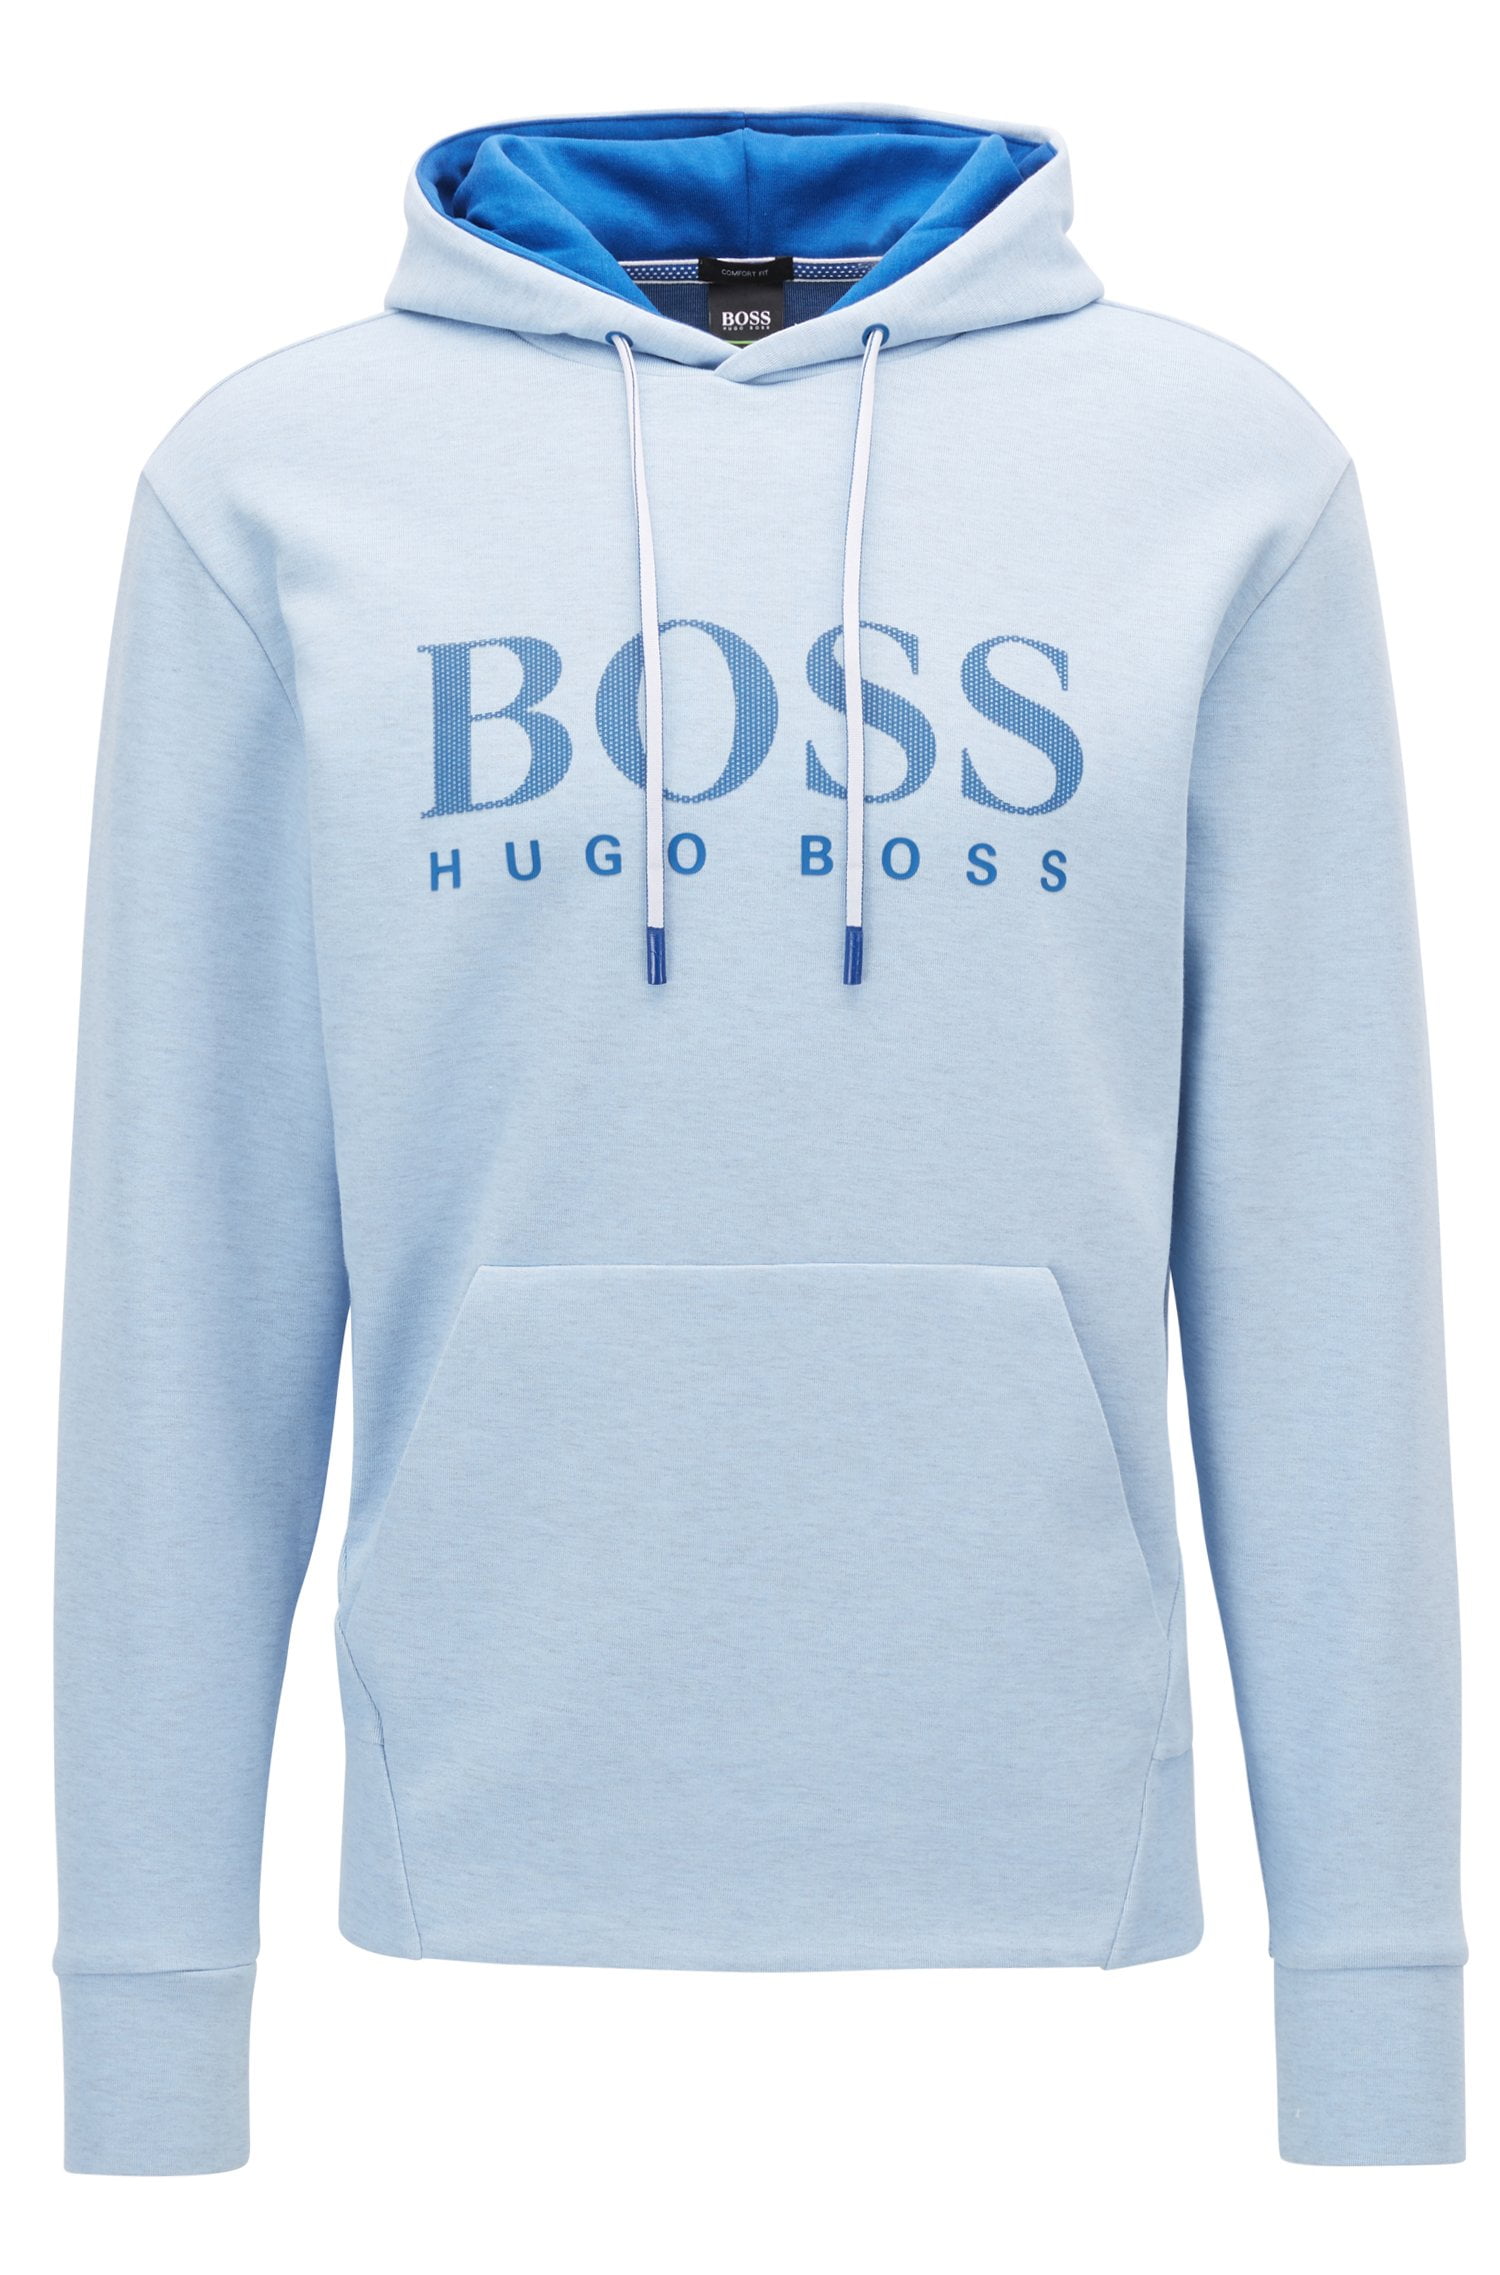 hugo boss hoodie canada